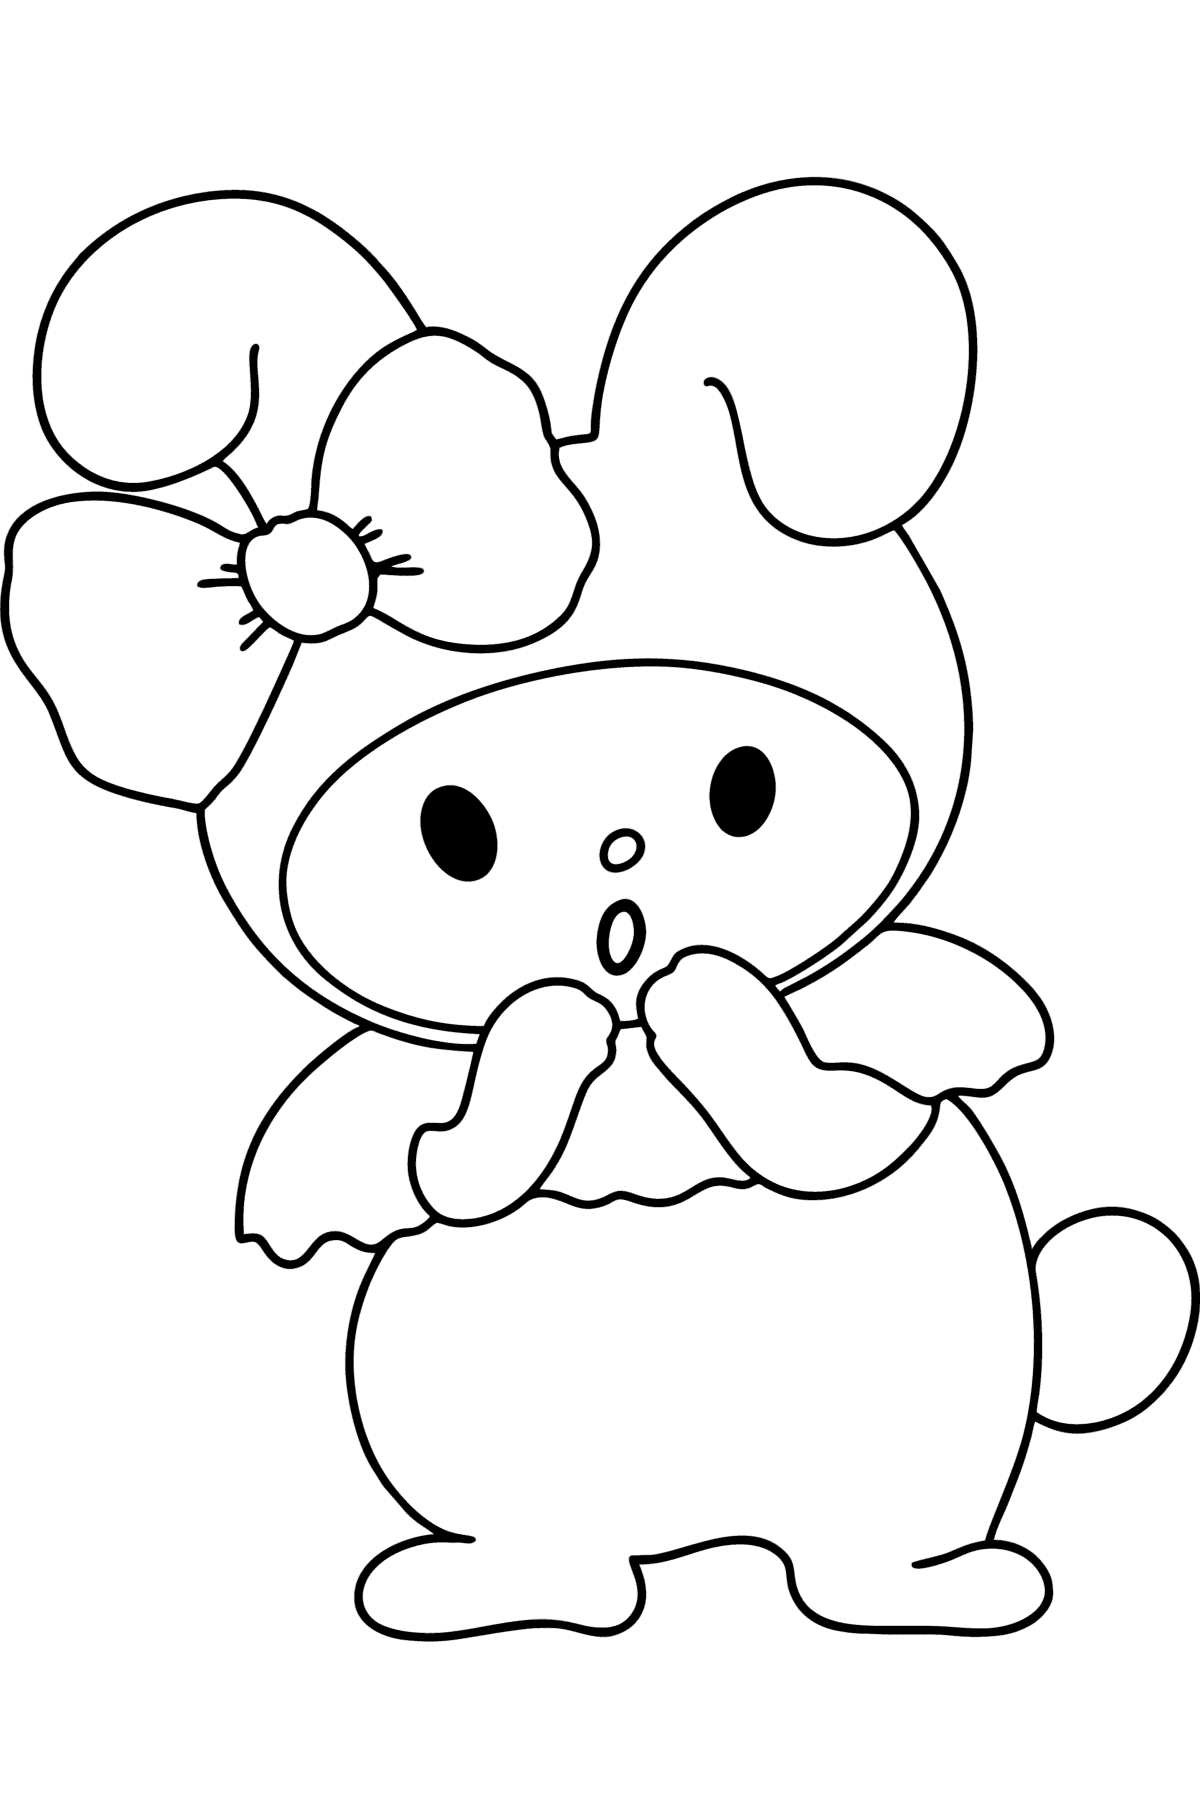 Coloriage Hello Kitty My Melody - Coloriages pour les Enfants